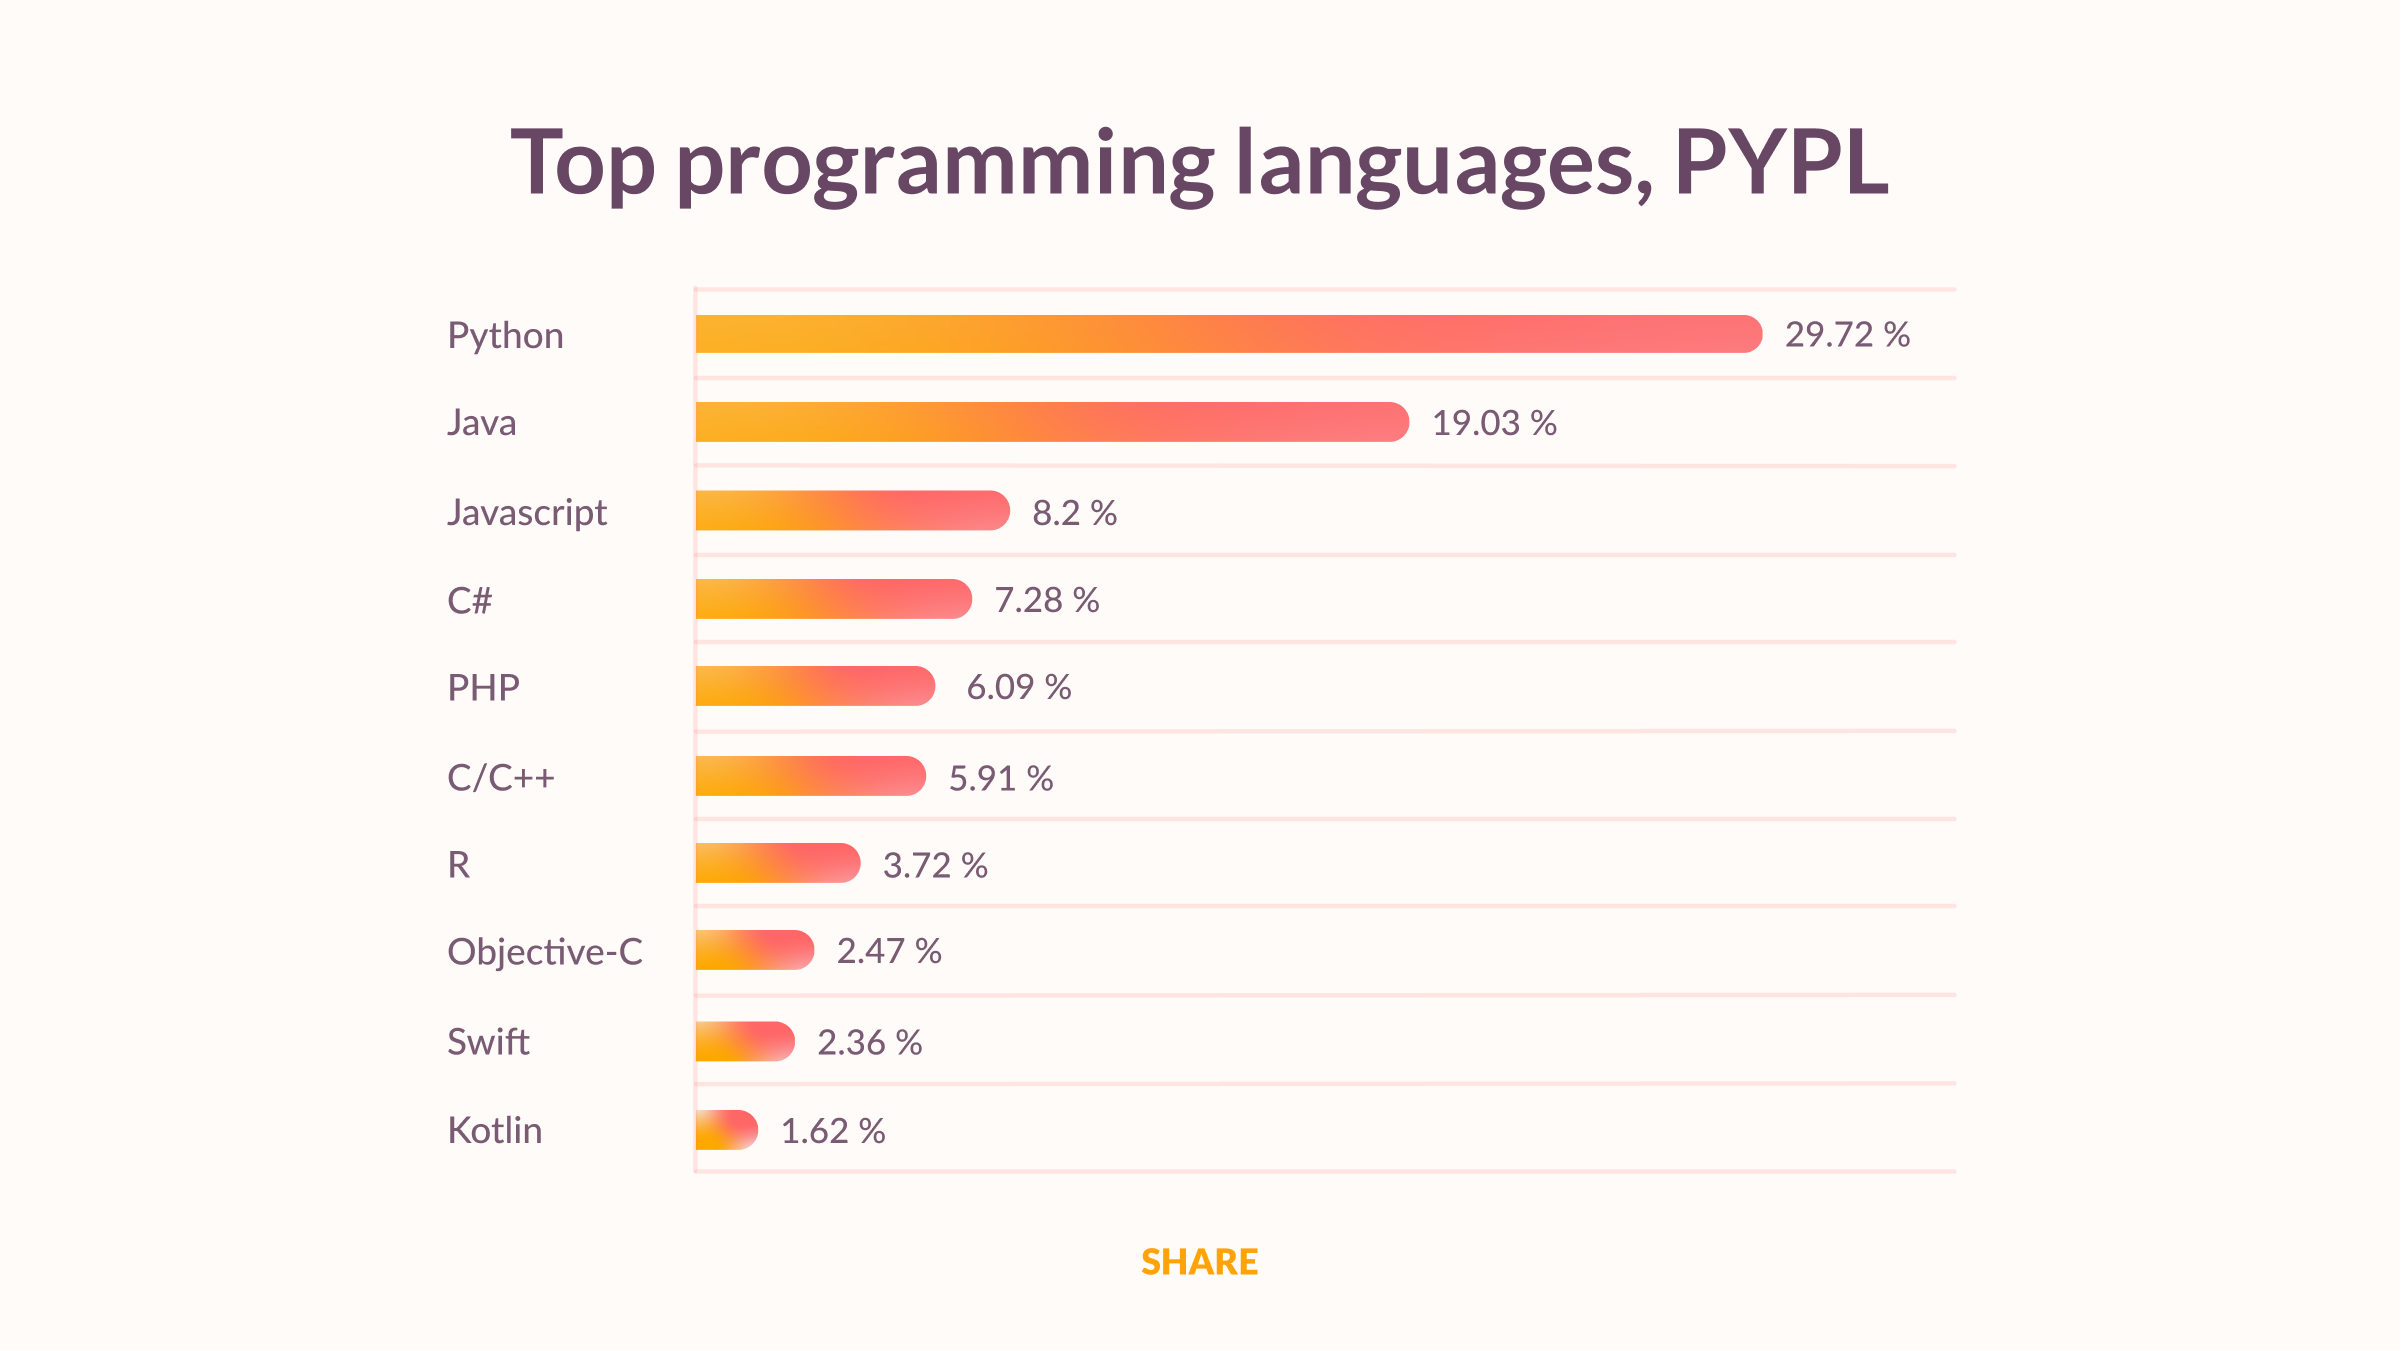 best programming languages